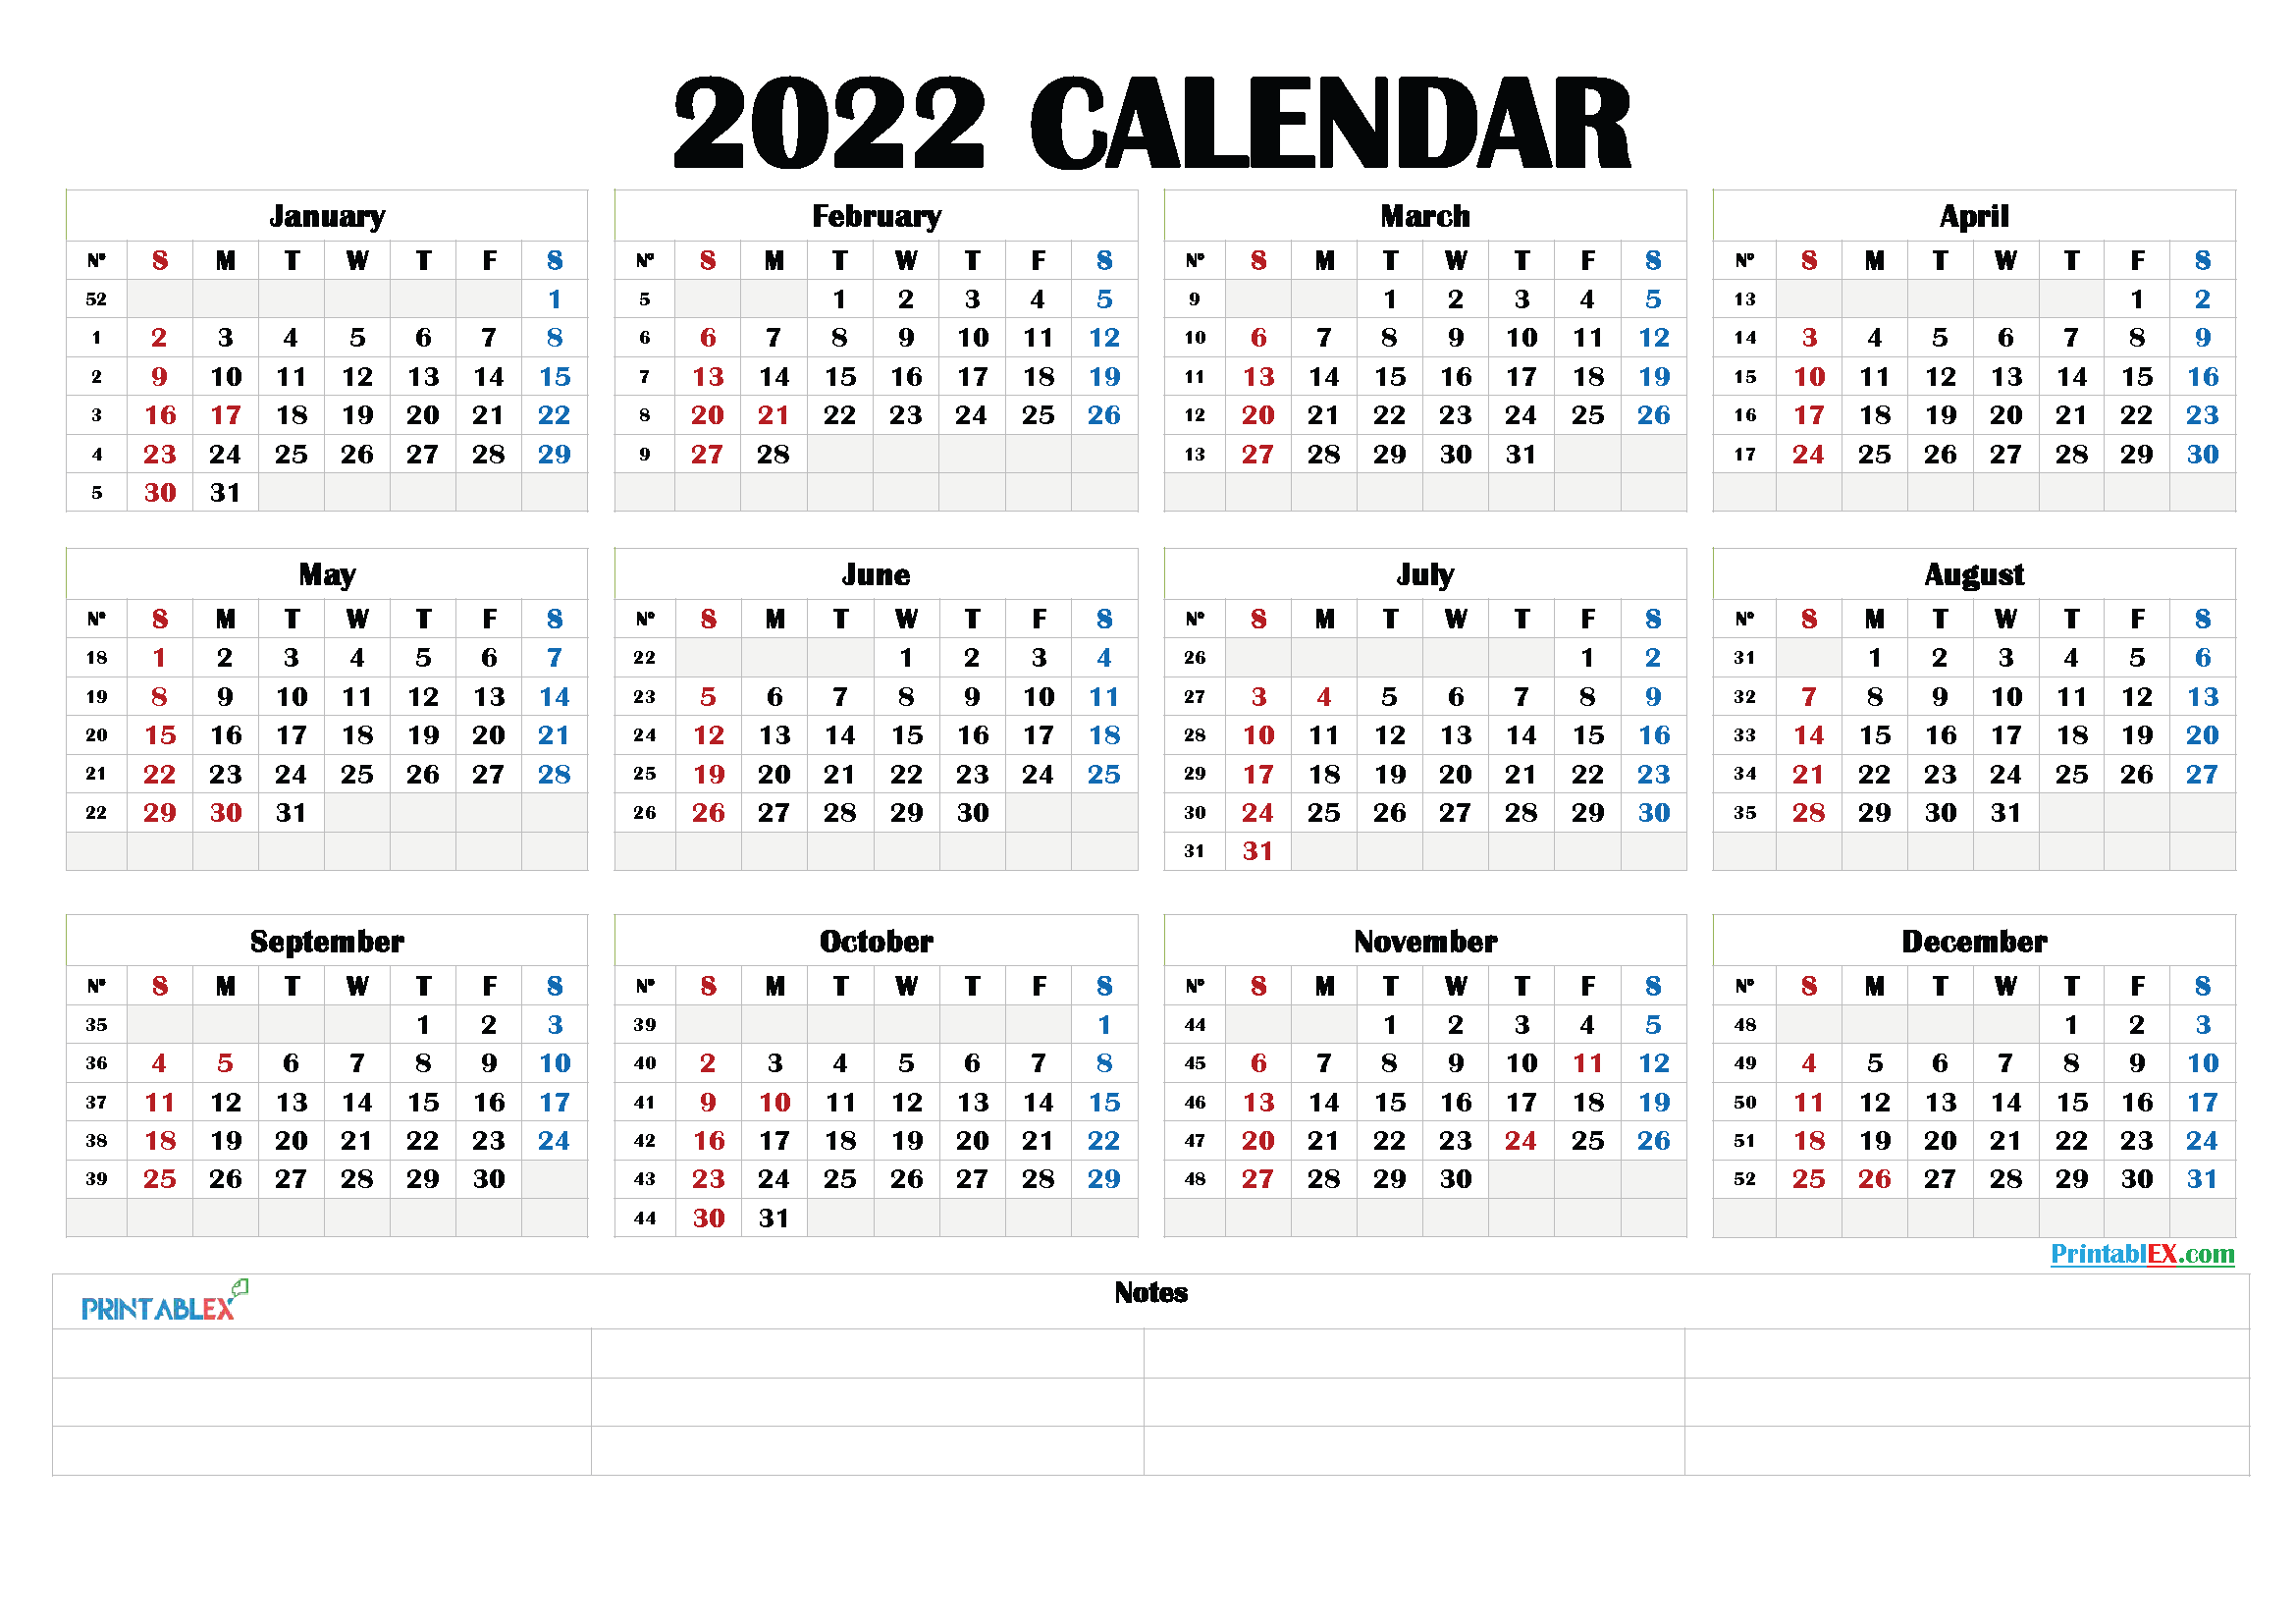 Free Printable 2022 Calendar by Year